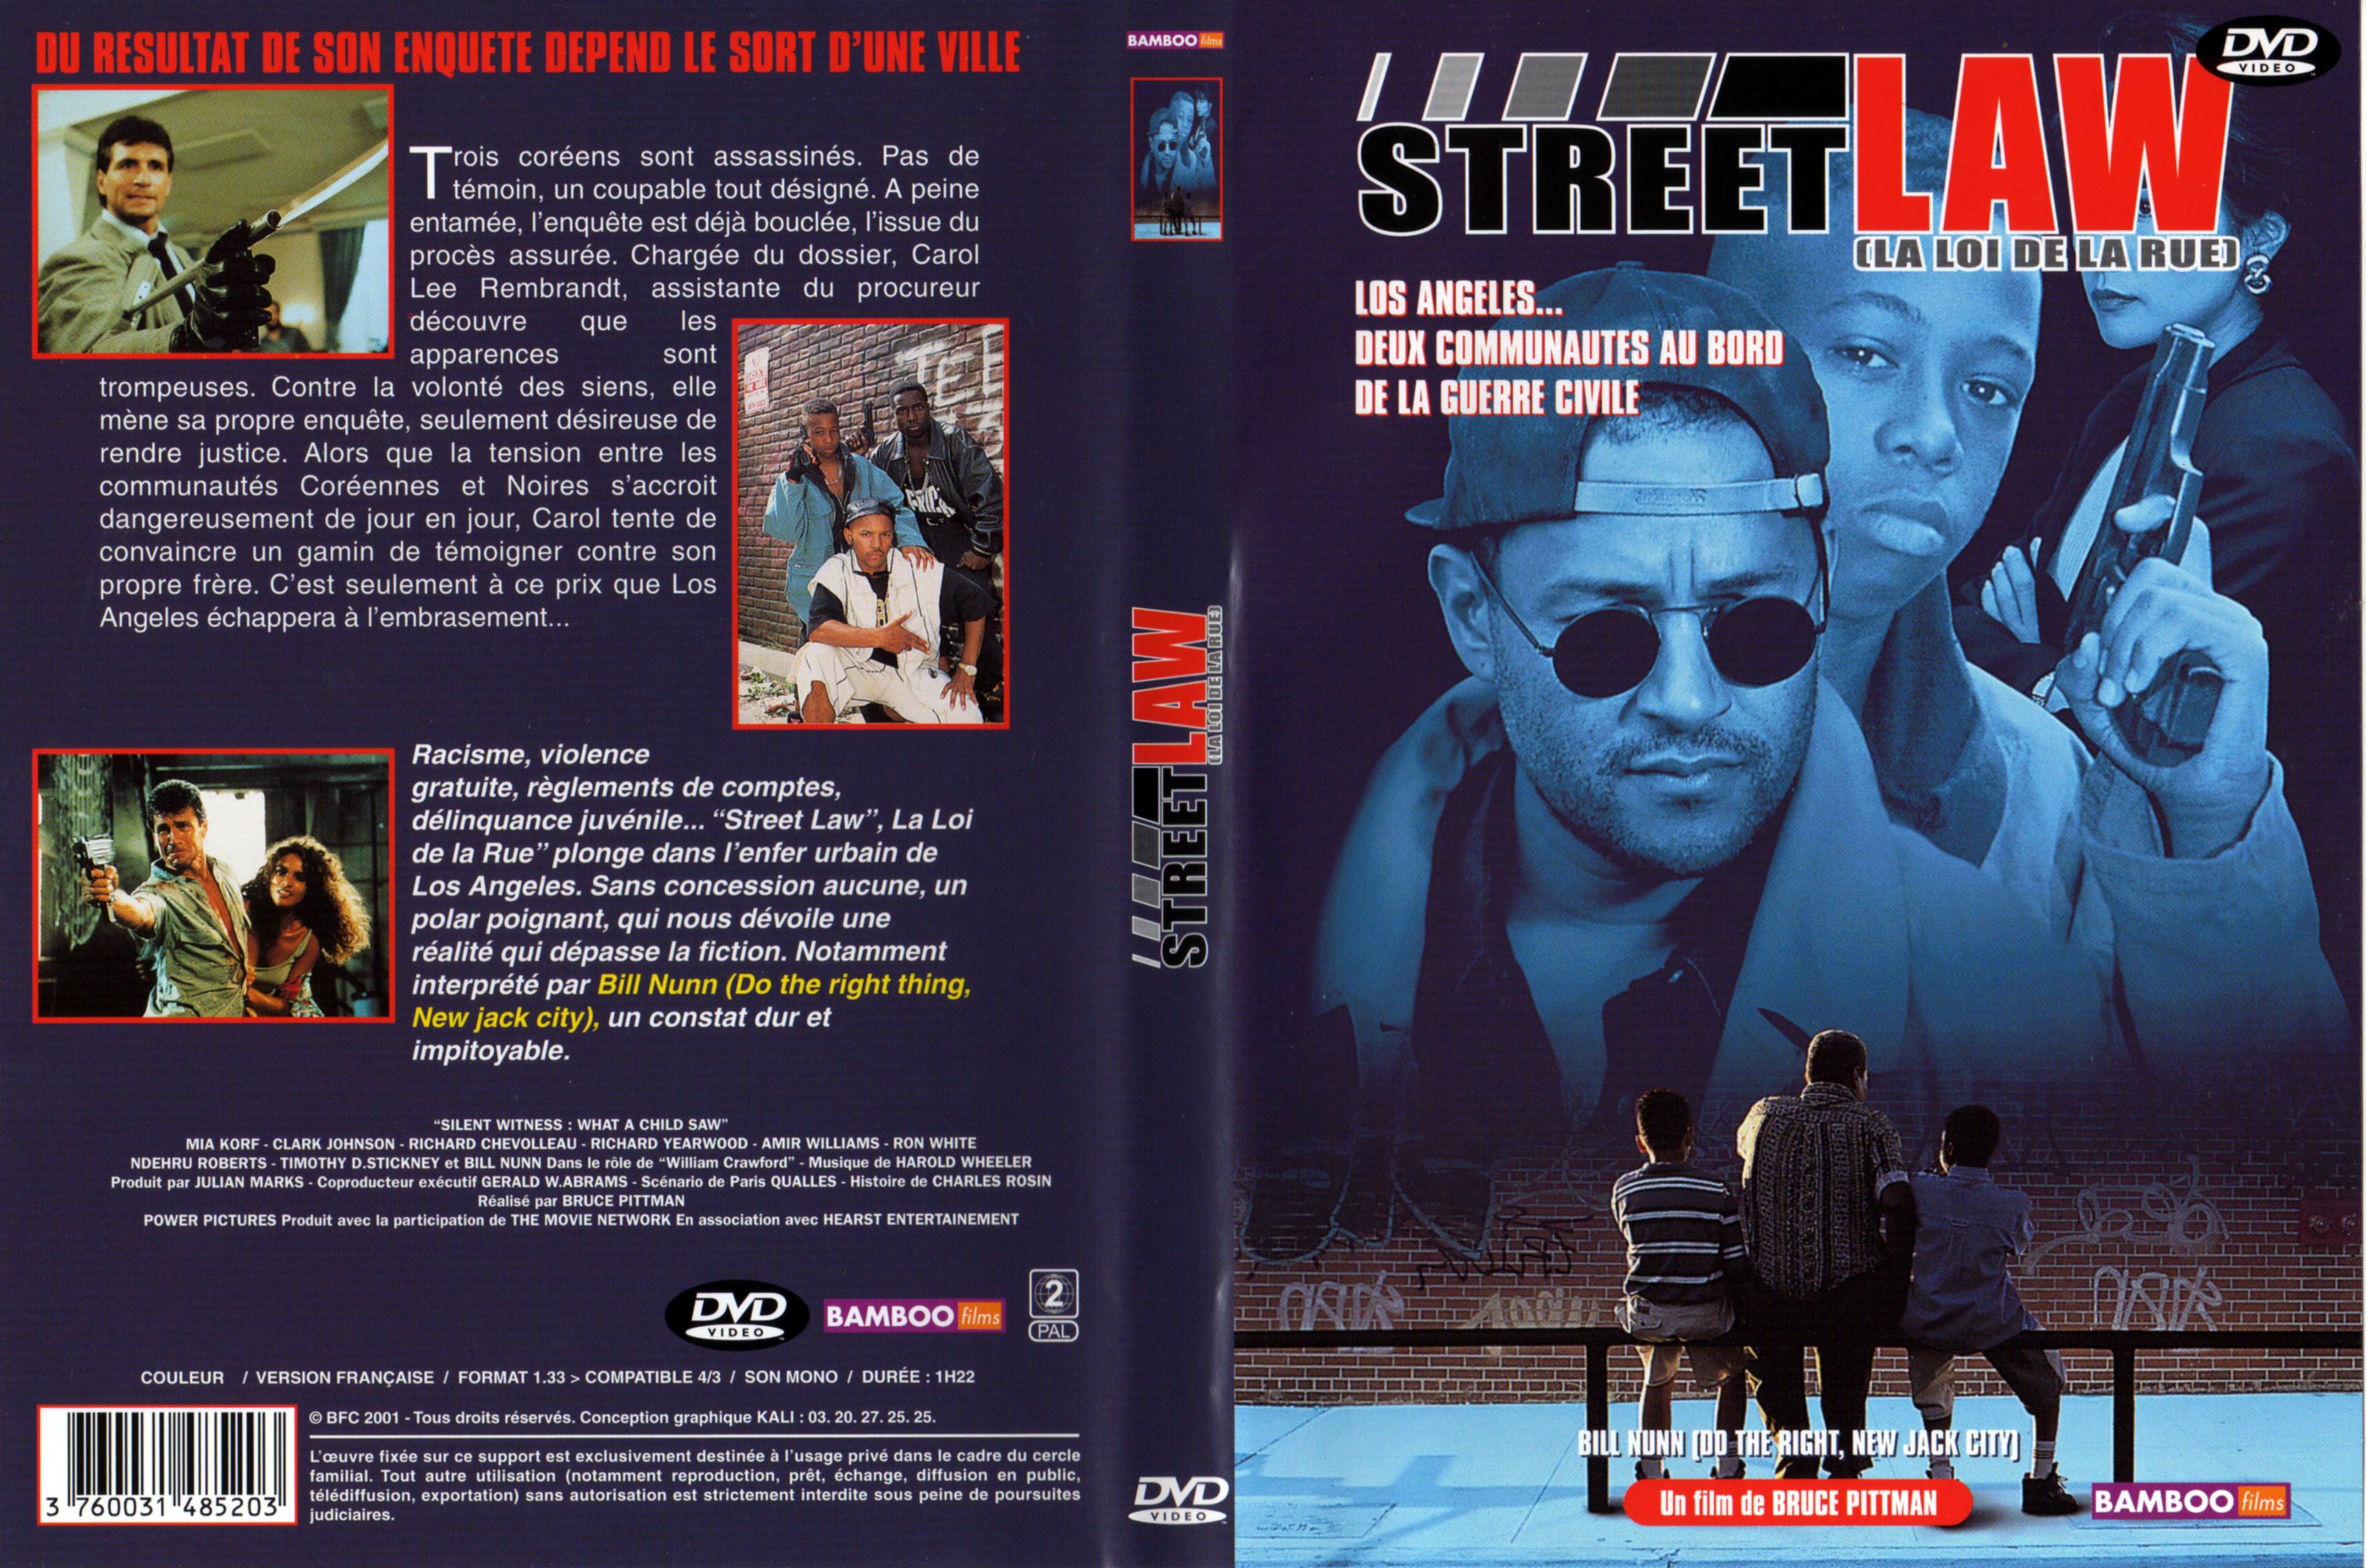 Jaquette DVD Street law